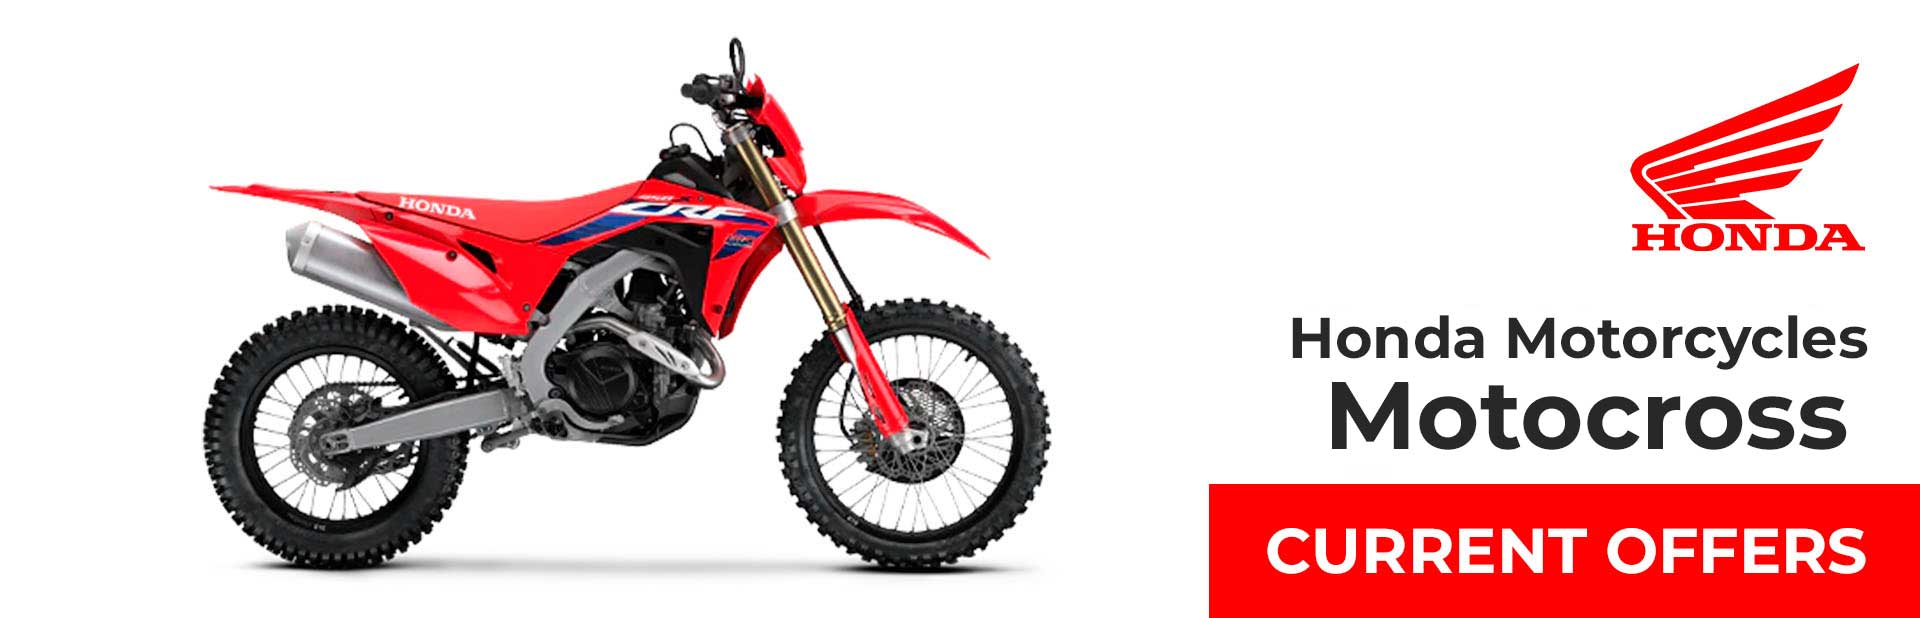 Honda Motorcycles: Motocross